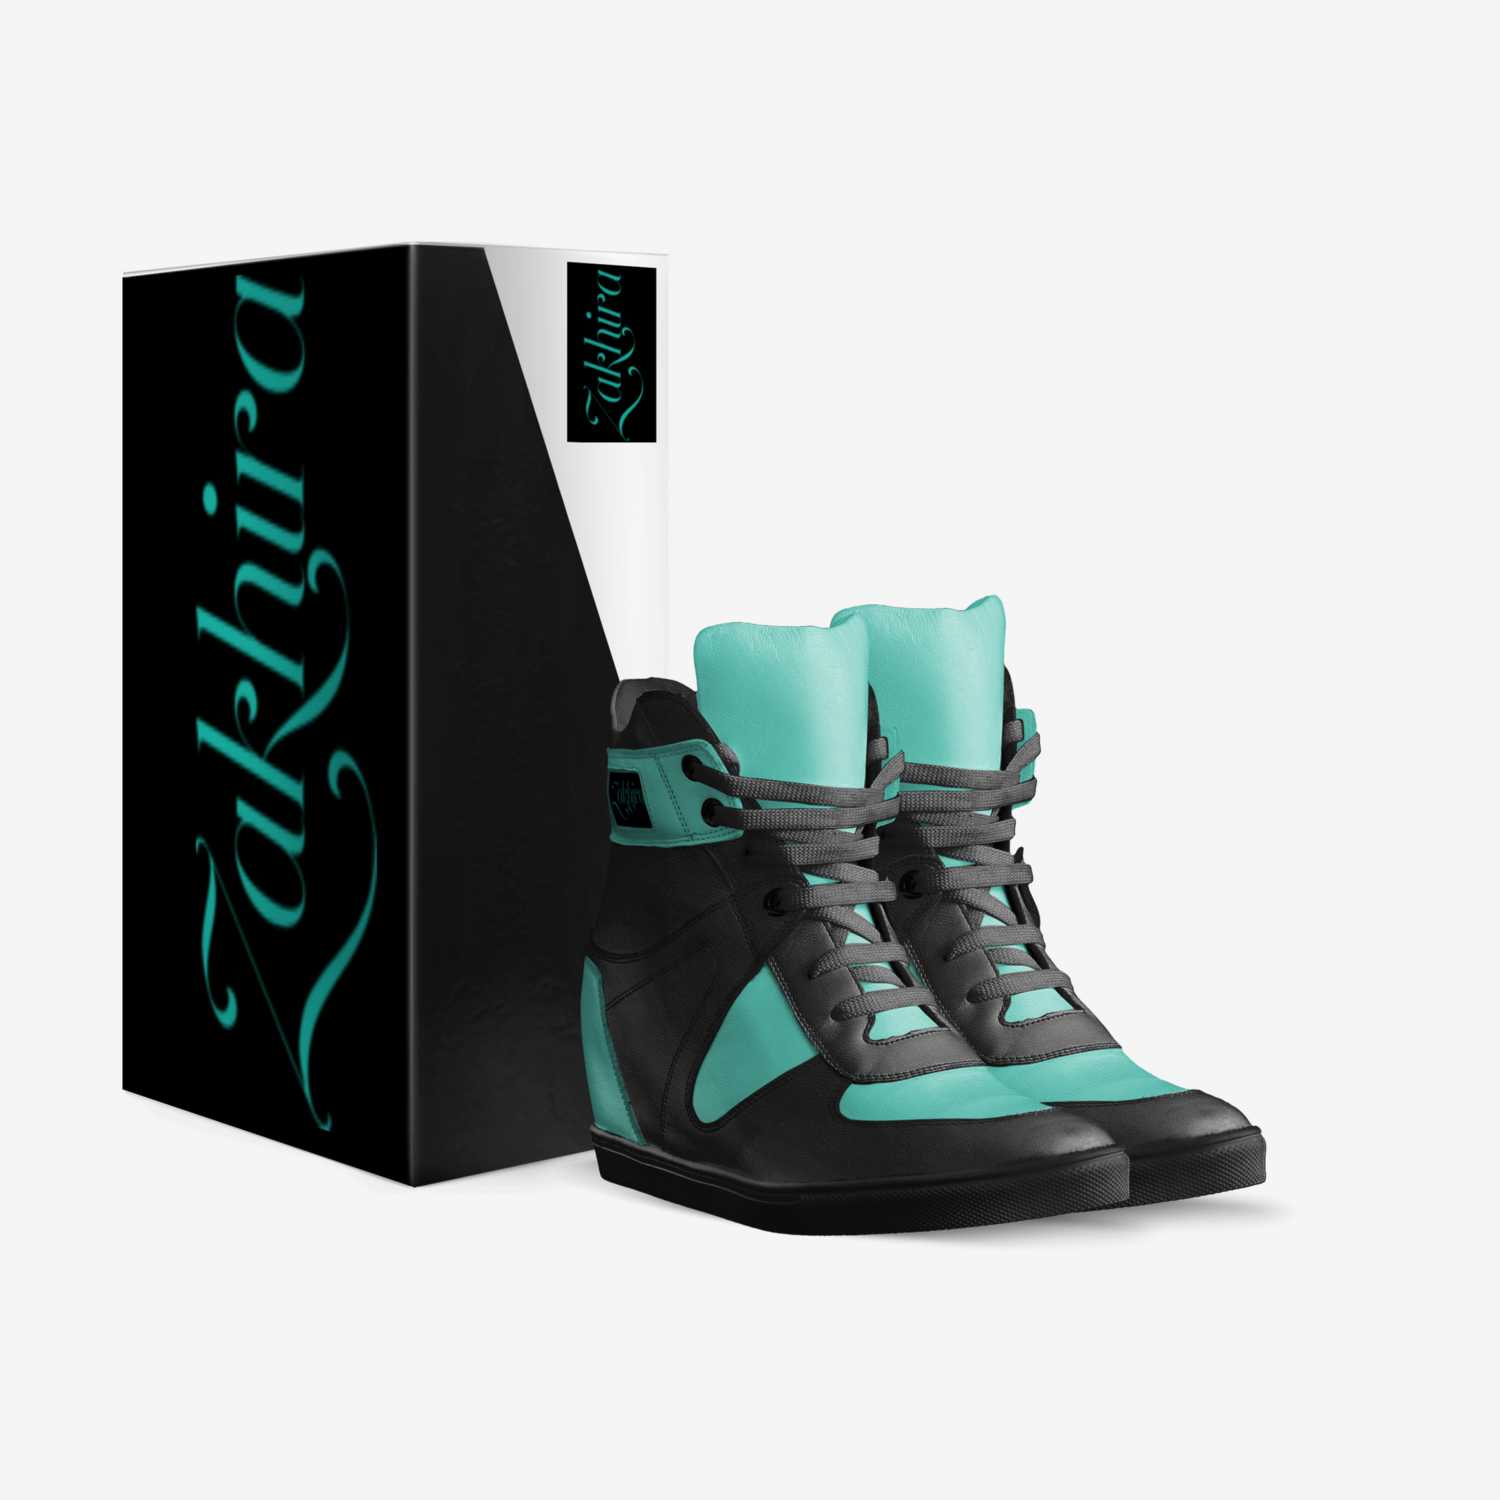 Zakhira custom made in Italy shoes by Zaina Livingston | Box view